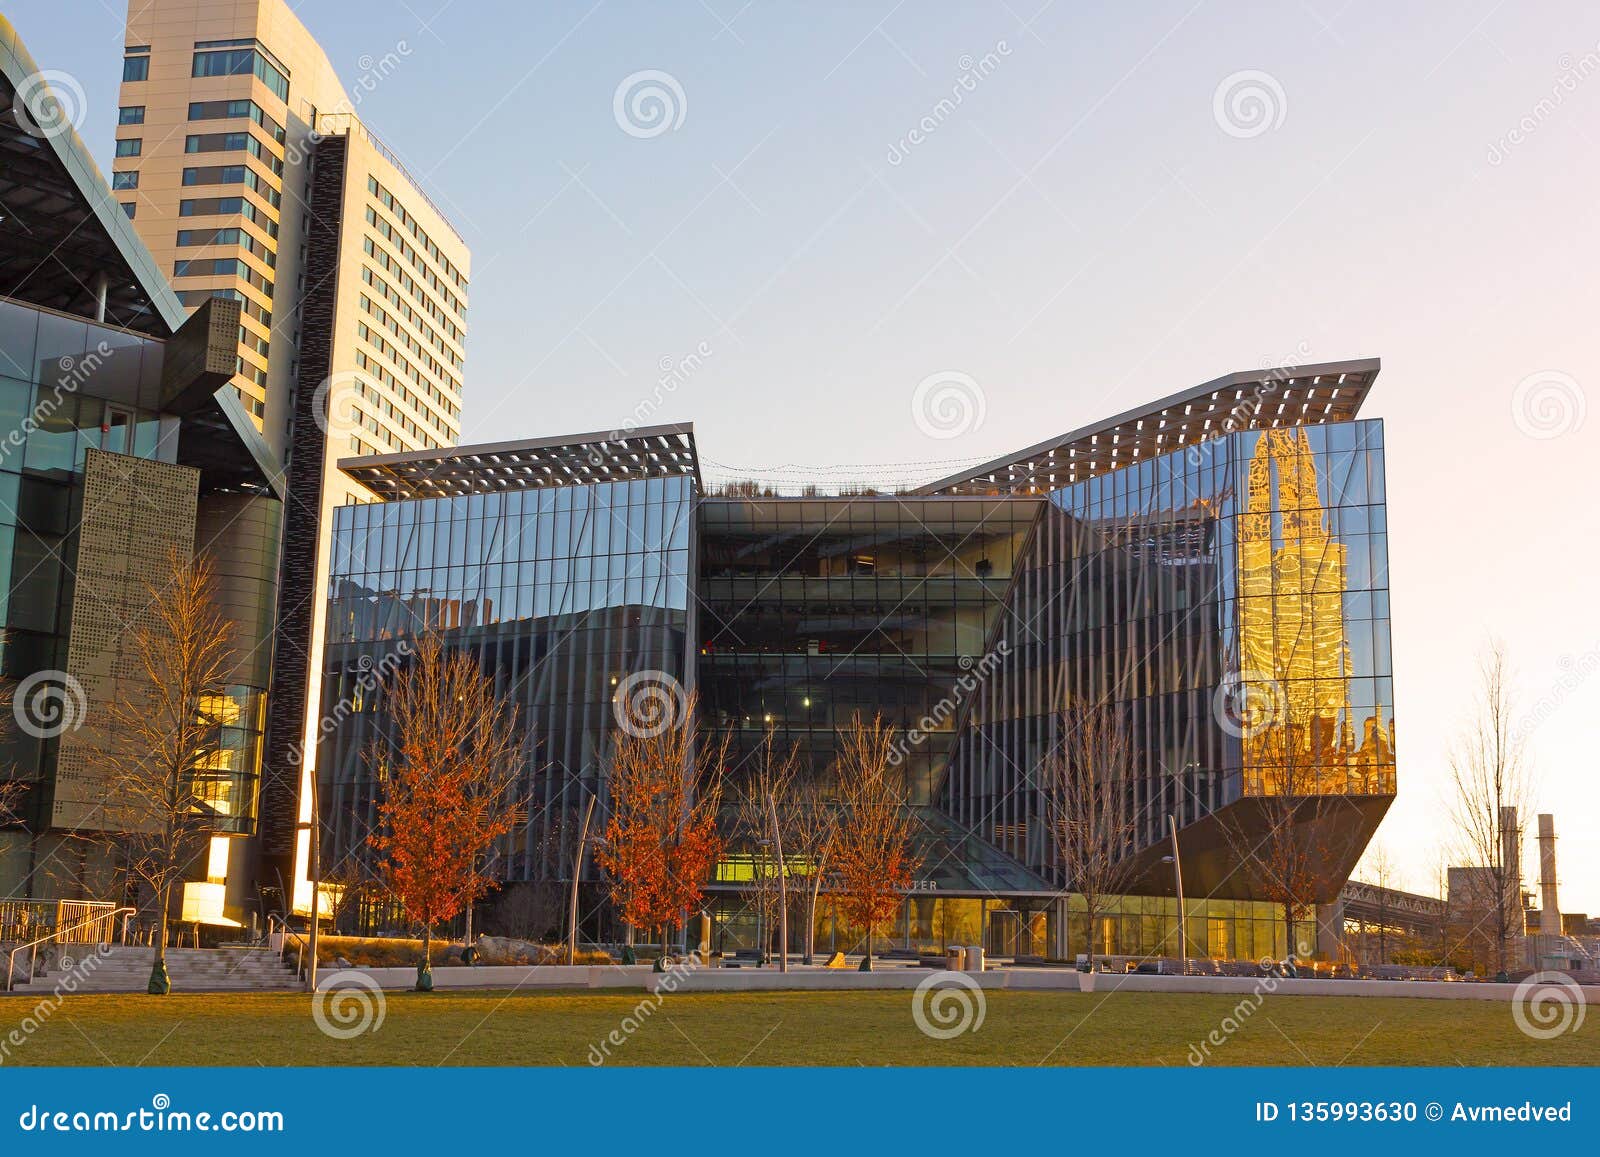 Tata Innovation Building At Sunrise Editorial Image Image Of